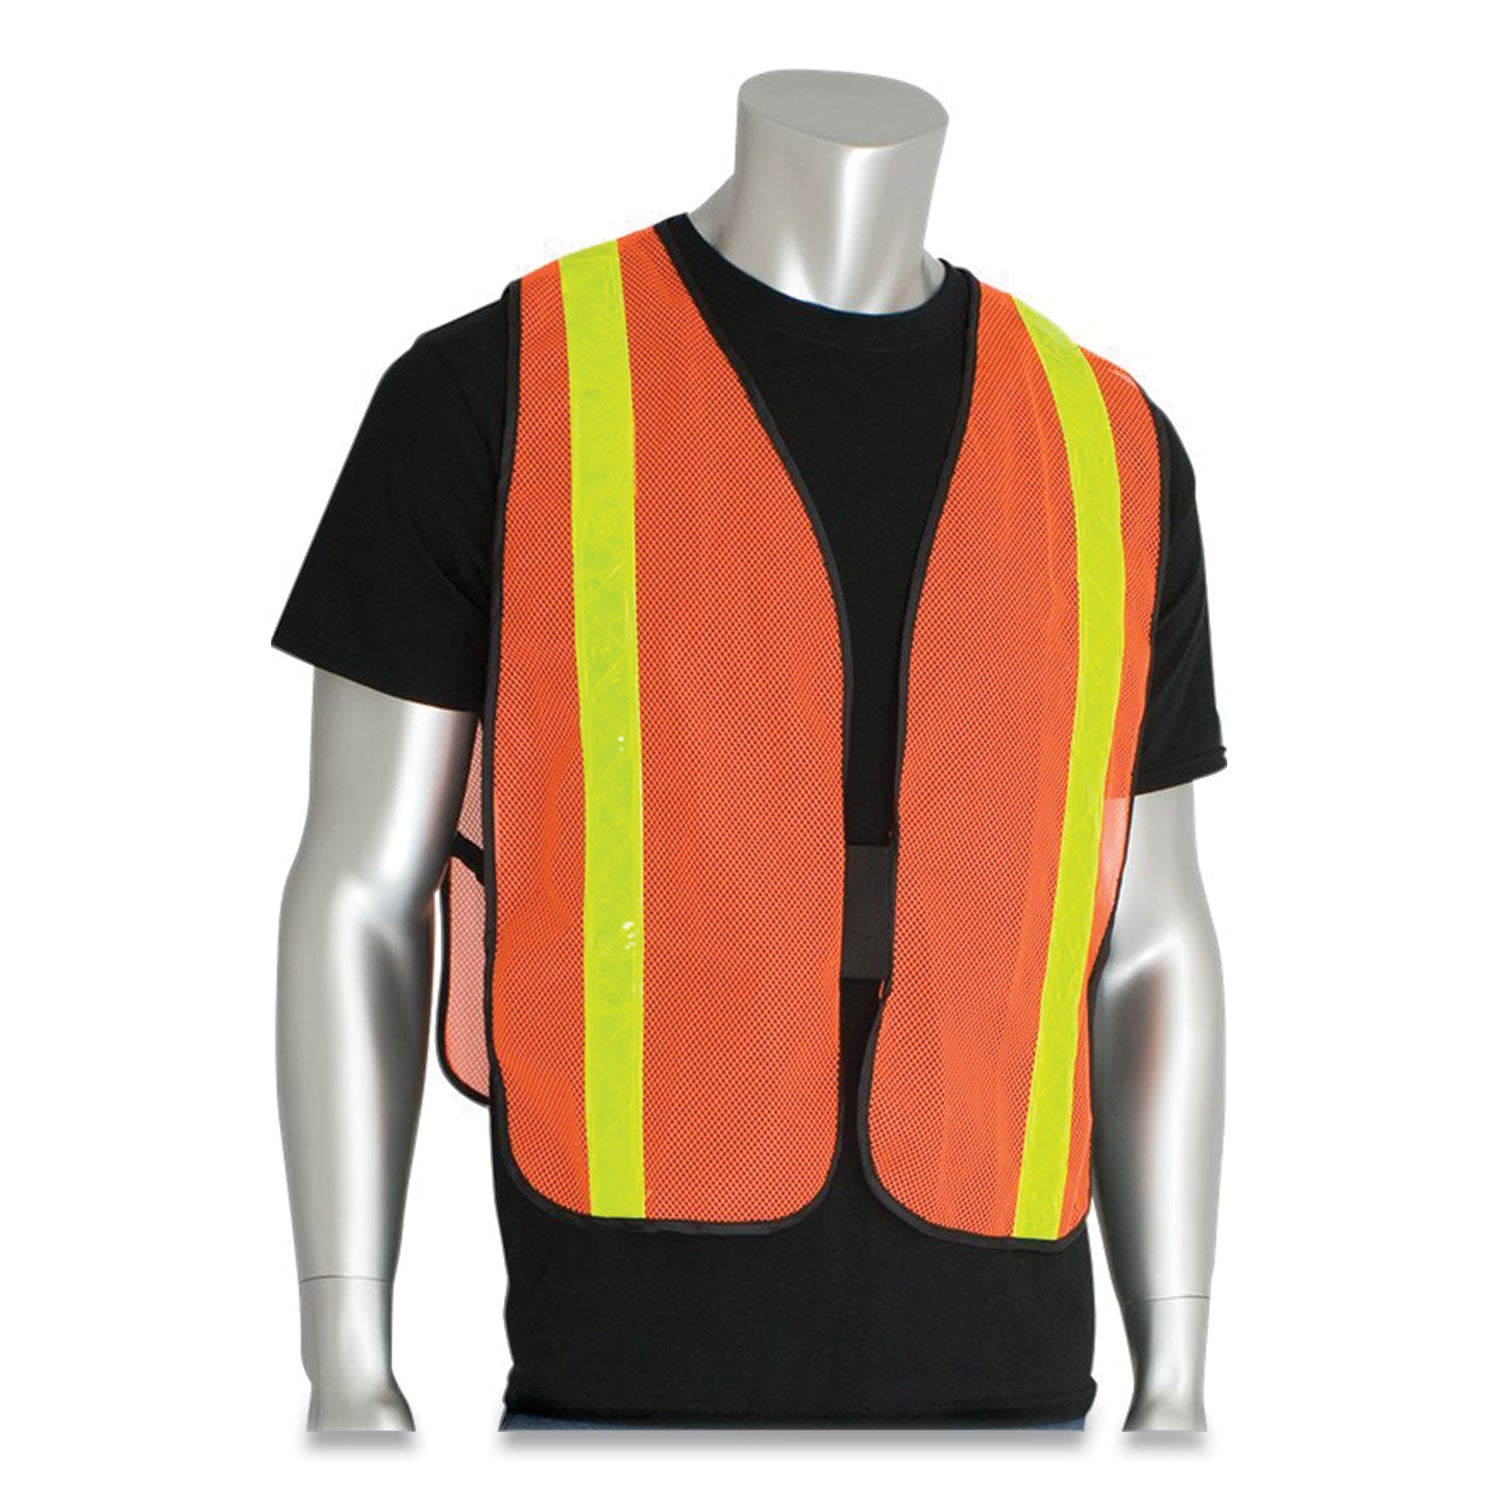 hook-and-loop-safety-vest-one-size-fits-most-hi-viz-orange-with-yellow-prismatic-tape_pid300evorpor - 2